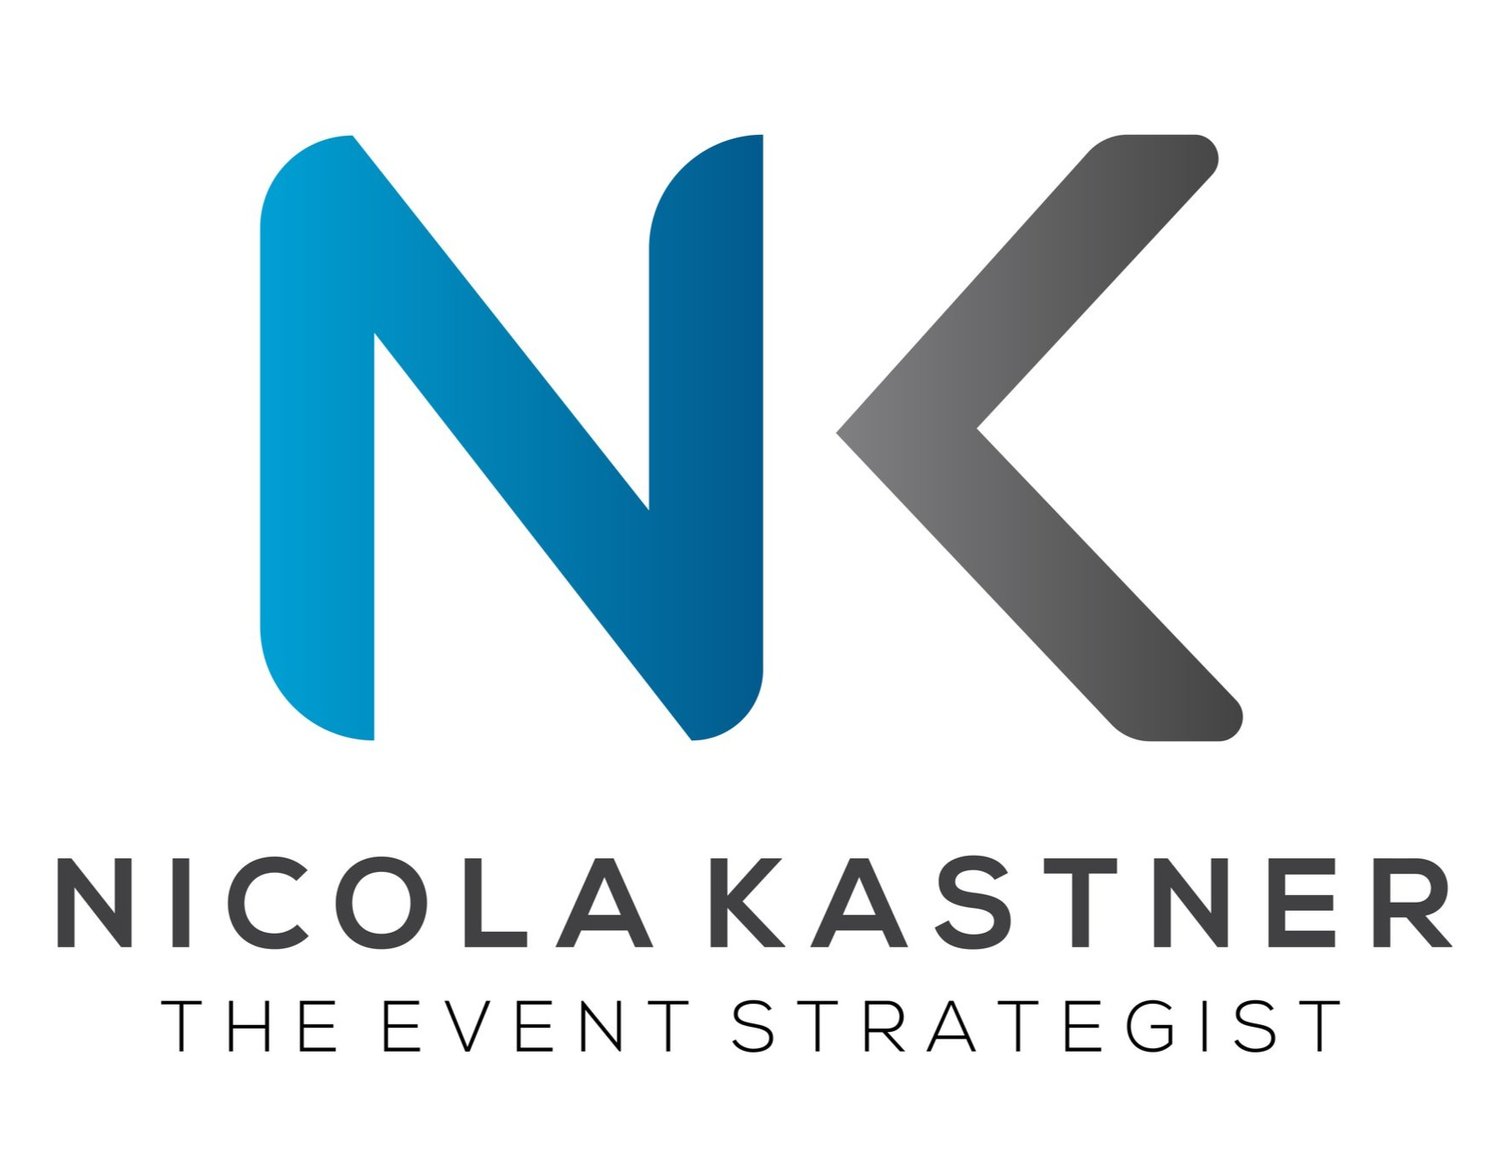 Nicola Kastner: The Event Strategist